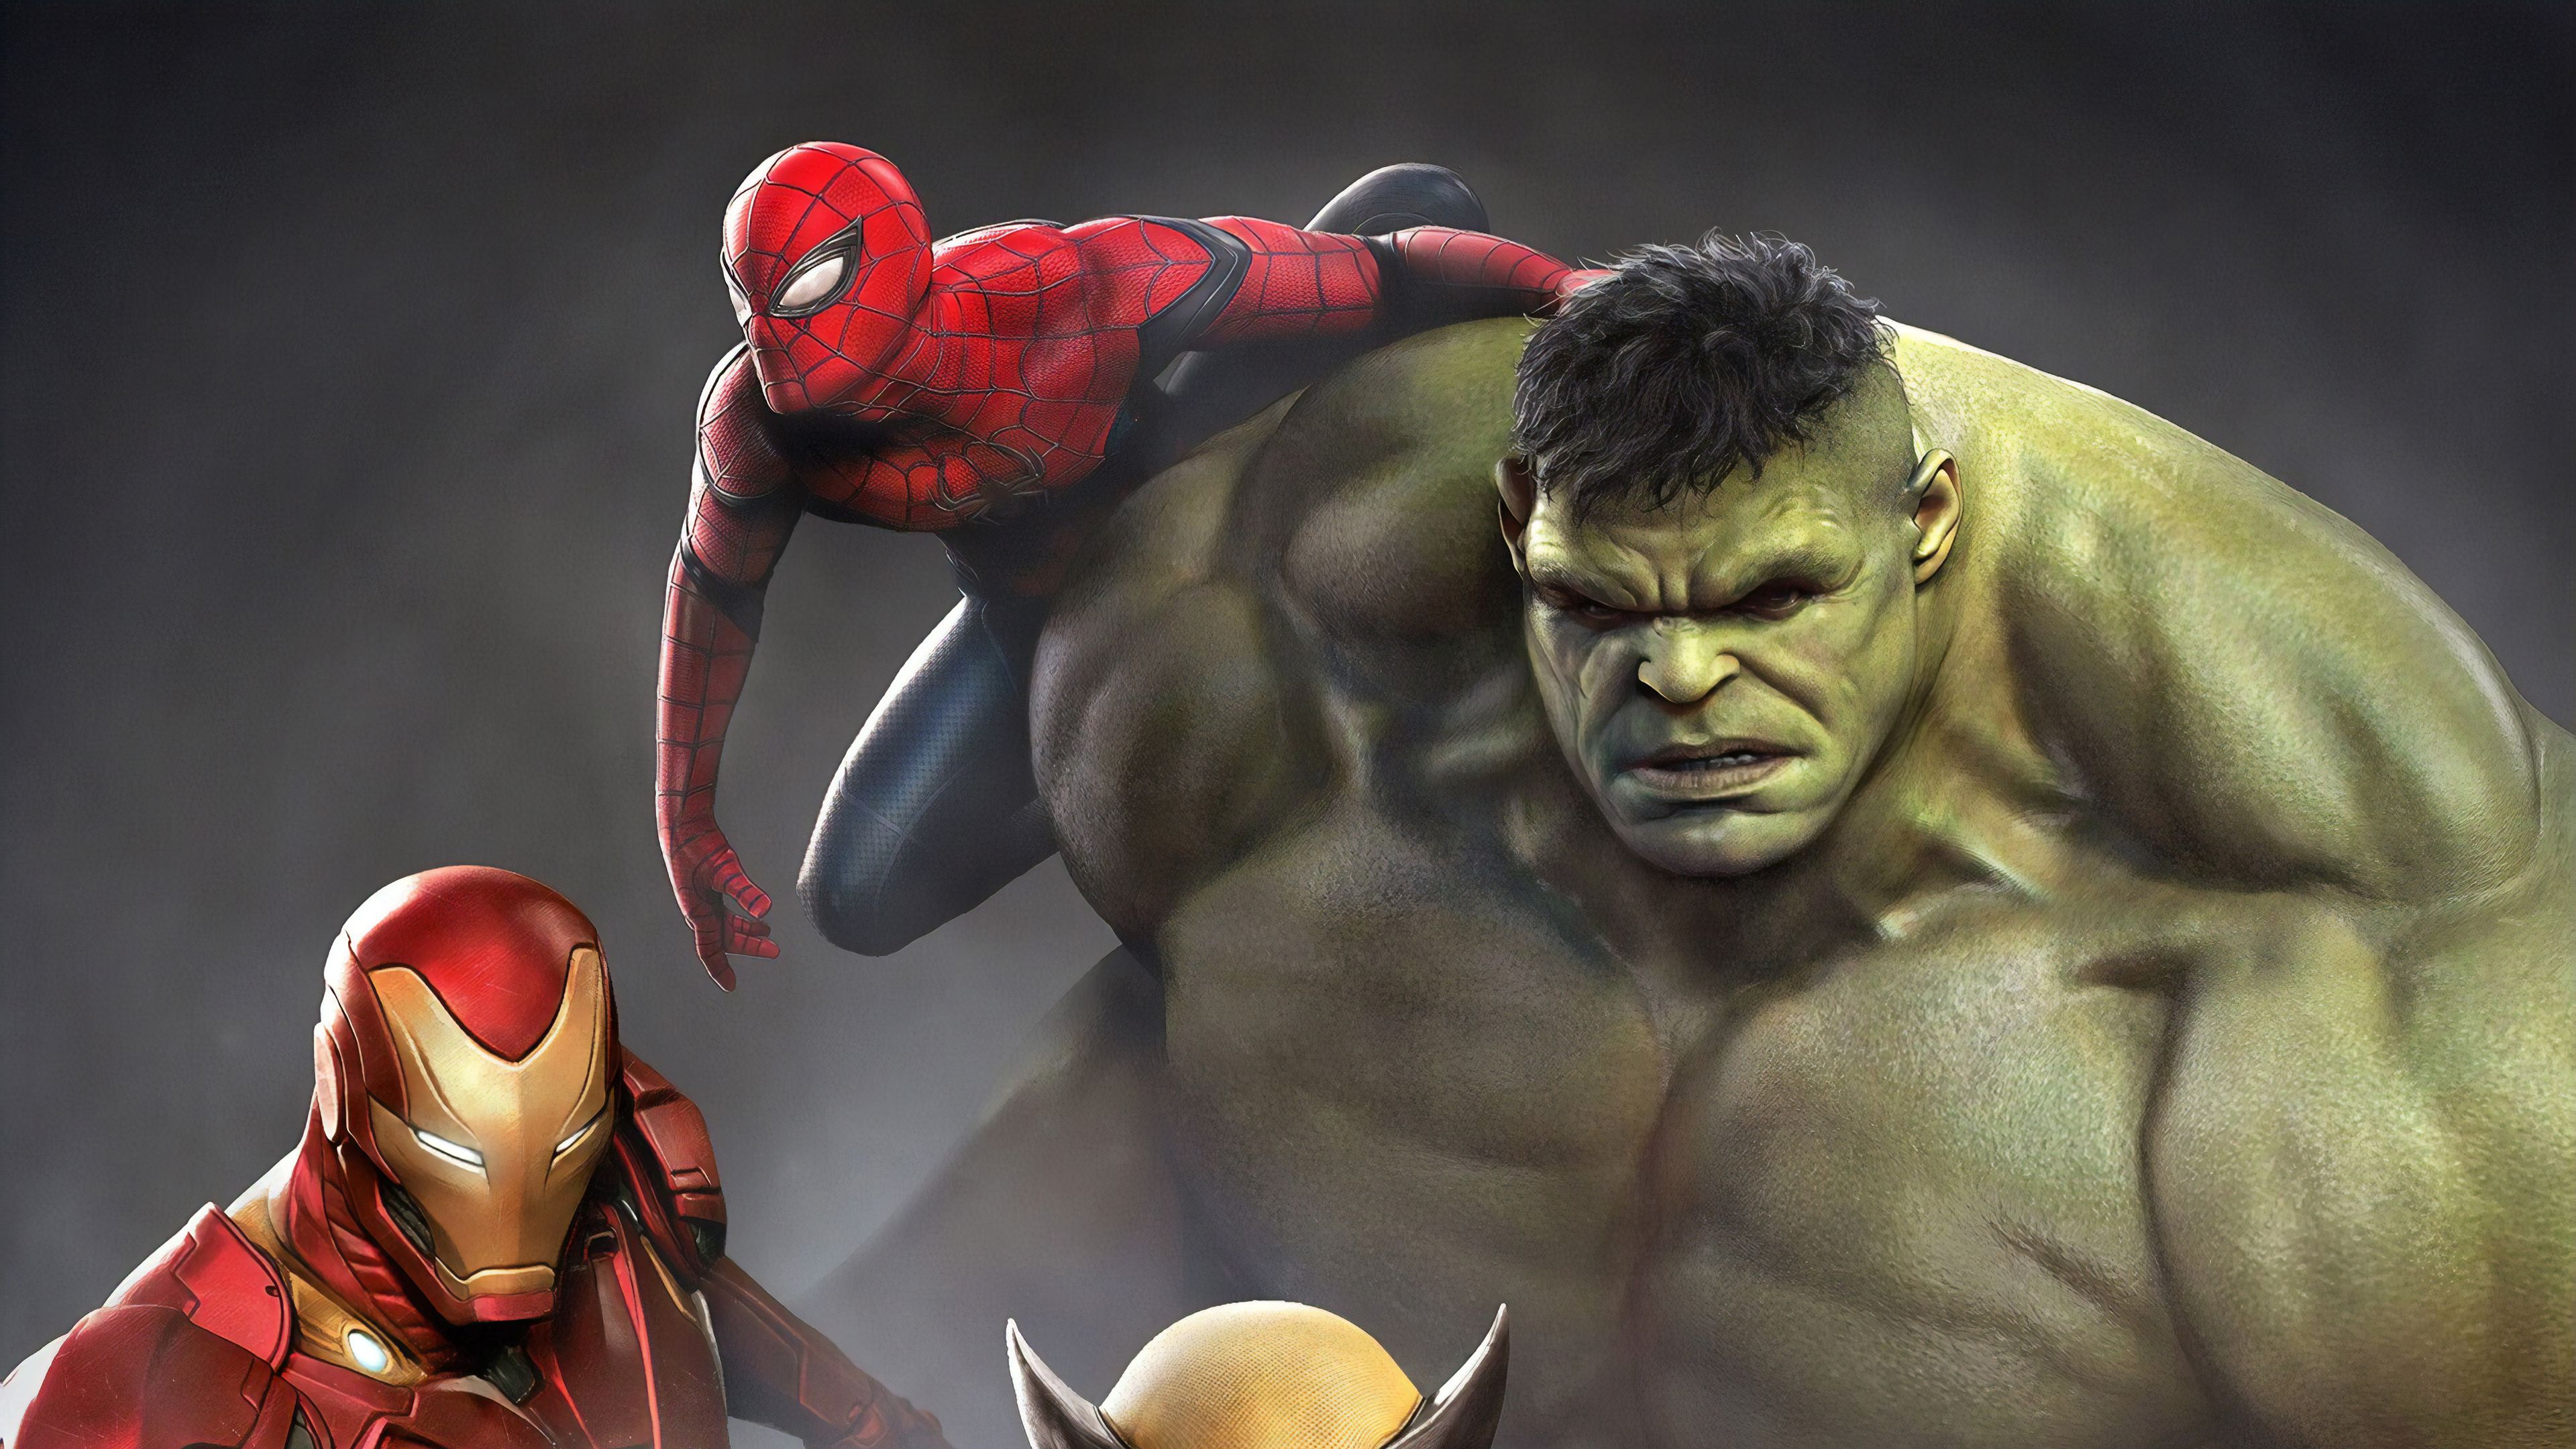 Iron Man Hulk Spiderman Wolverine 4k, HD Superheroes, 4k Wallpaper, Image, Background, Photo and Picture